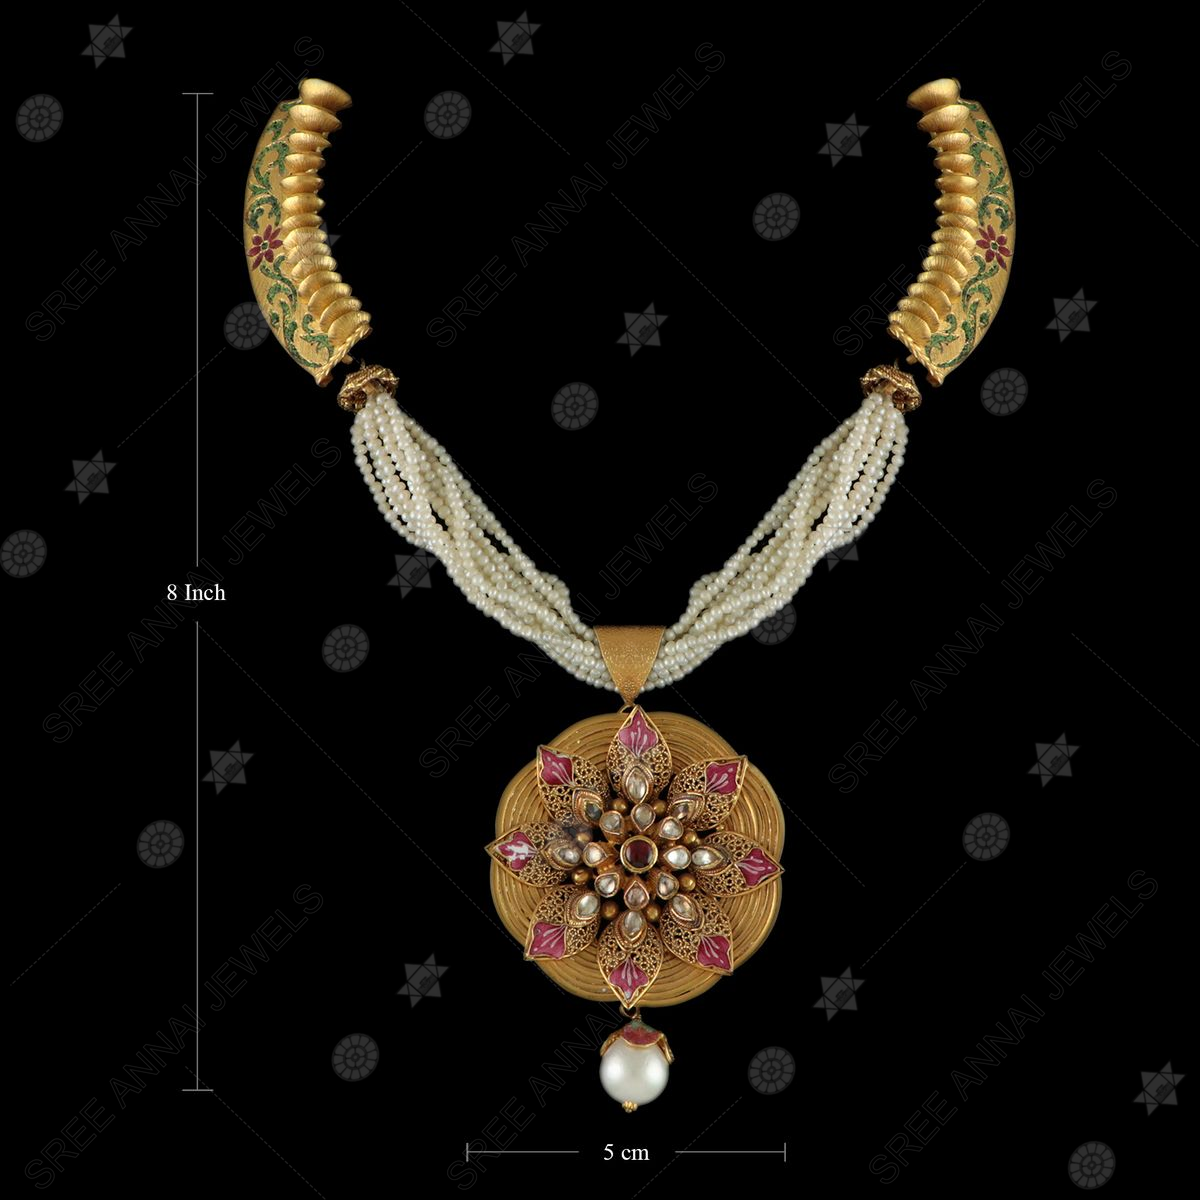 Dira Stone Gold Short Pendant Necklace in Ivory Mix | Kendra Scott